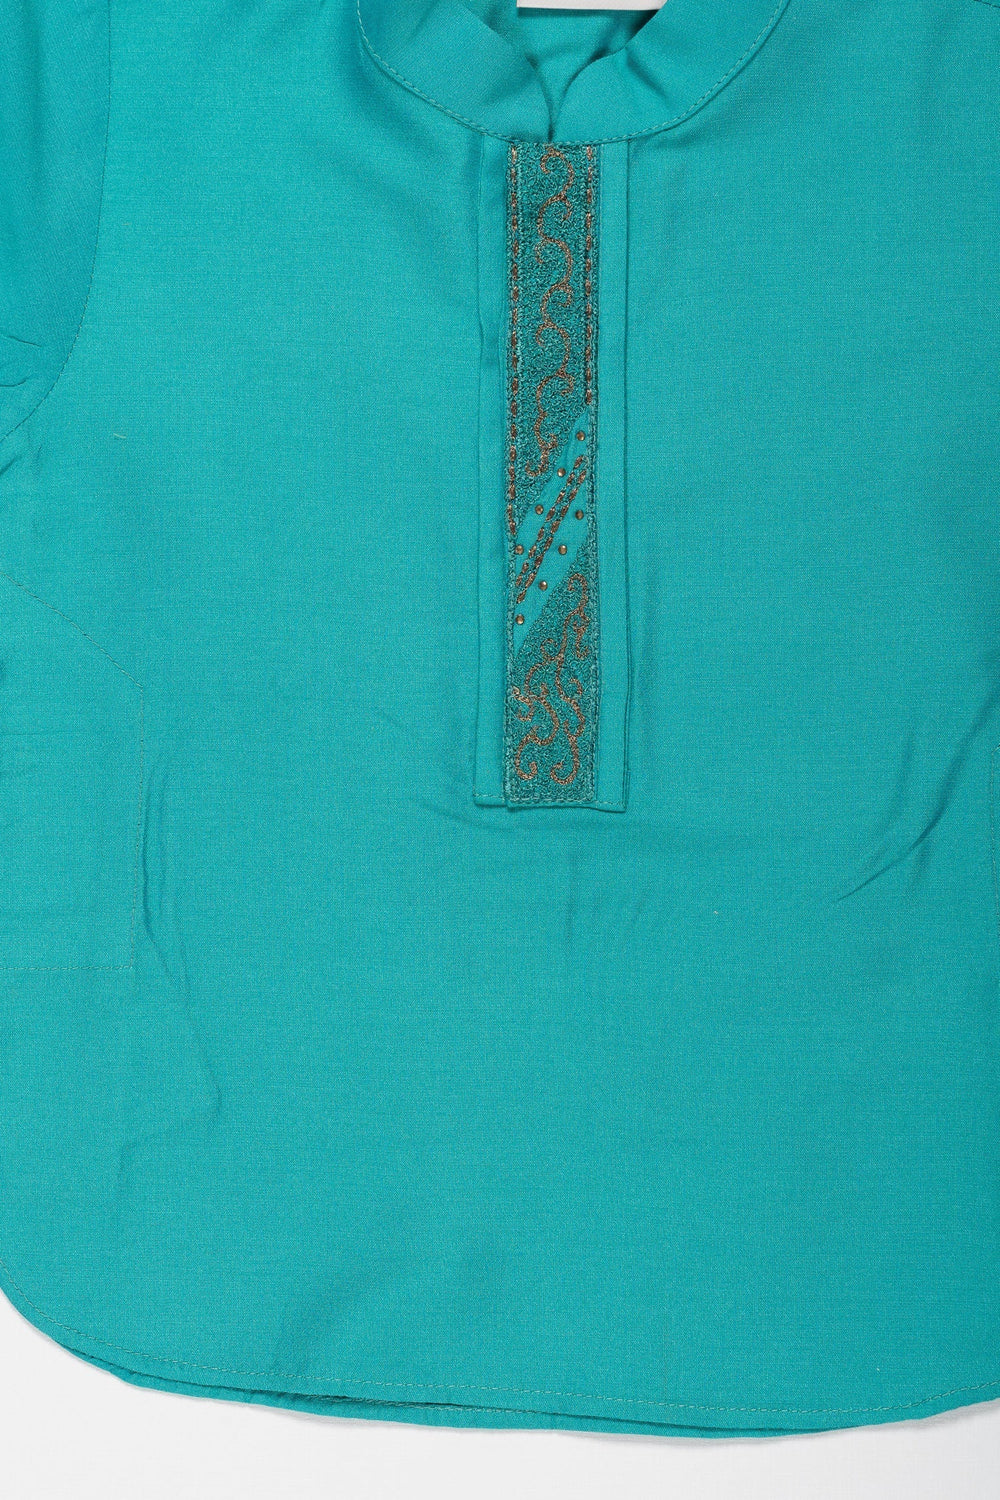 The Nesavu Boys Kurtha Shirt Boys Vibrant Teal Kurta Shirt - Traditional Elegance with a Modern Twist Nesavu Teal Boys Kurta Shirt | Sequin Detail | Comfortable Traditional Wear | The Nesavu